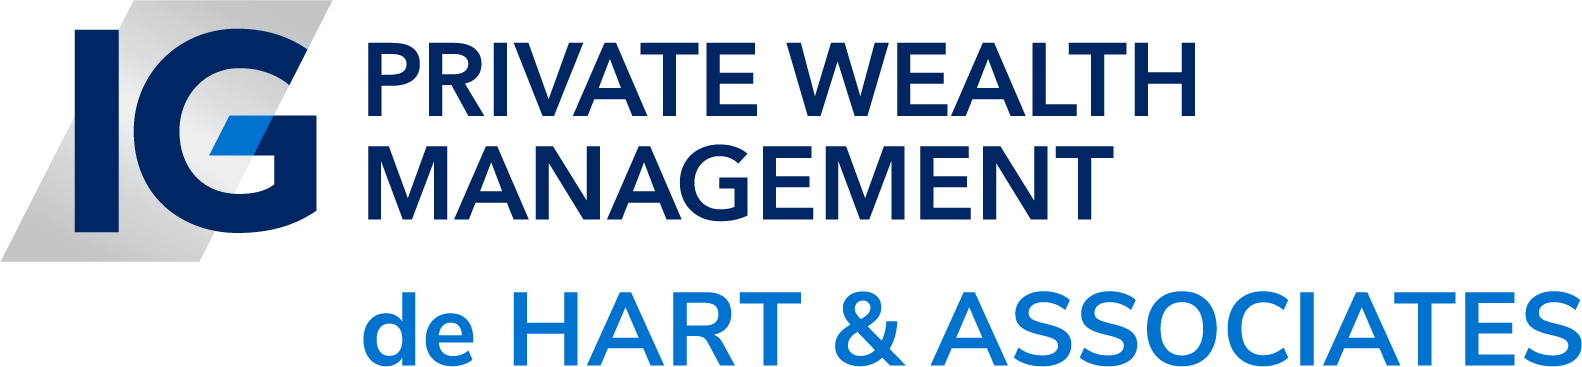 Logo for IG Private Wealth Management de Hart & Associates